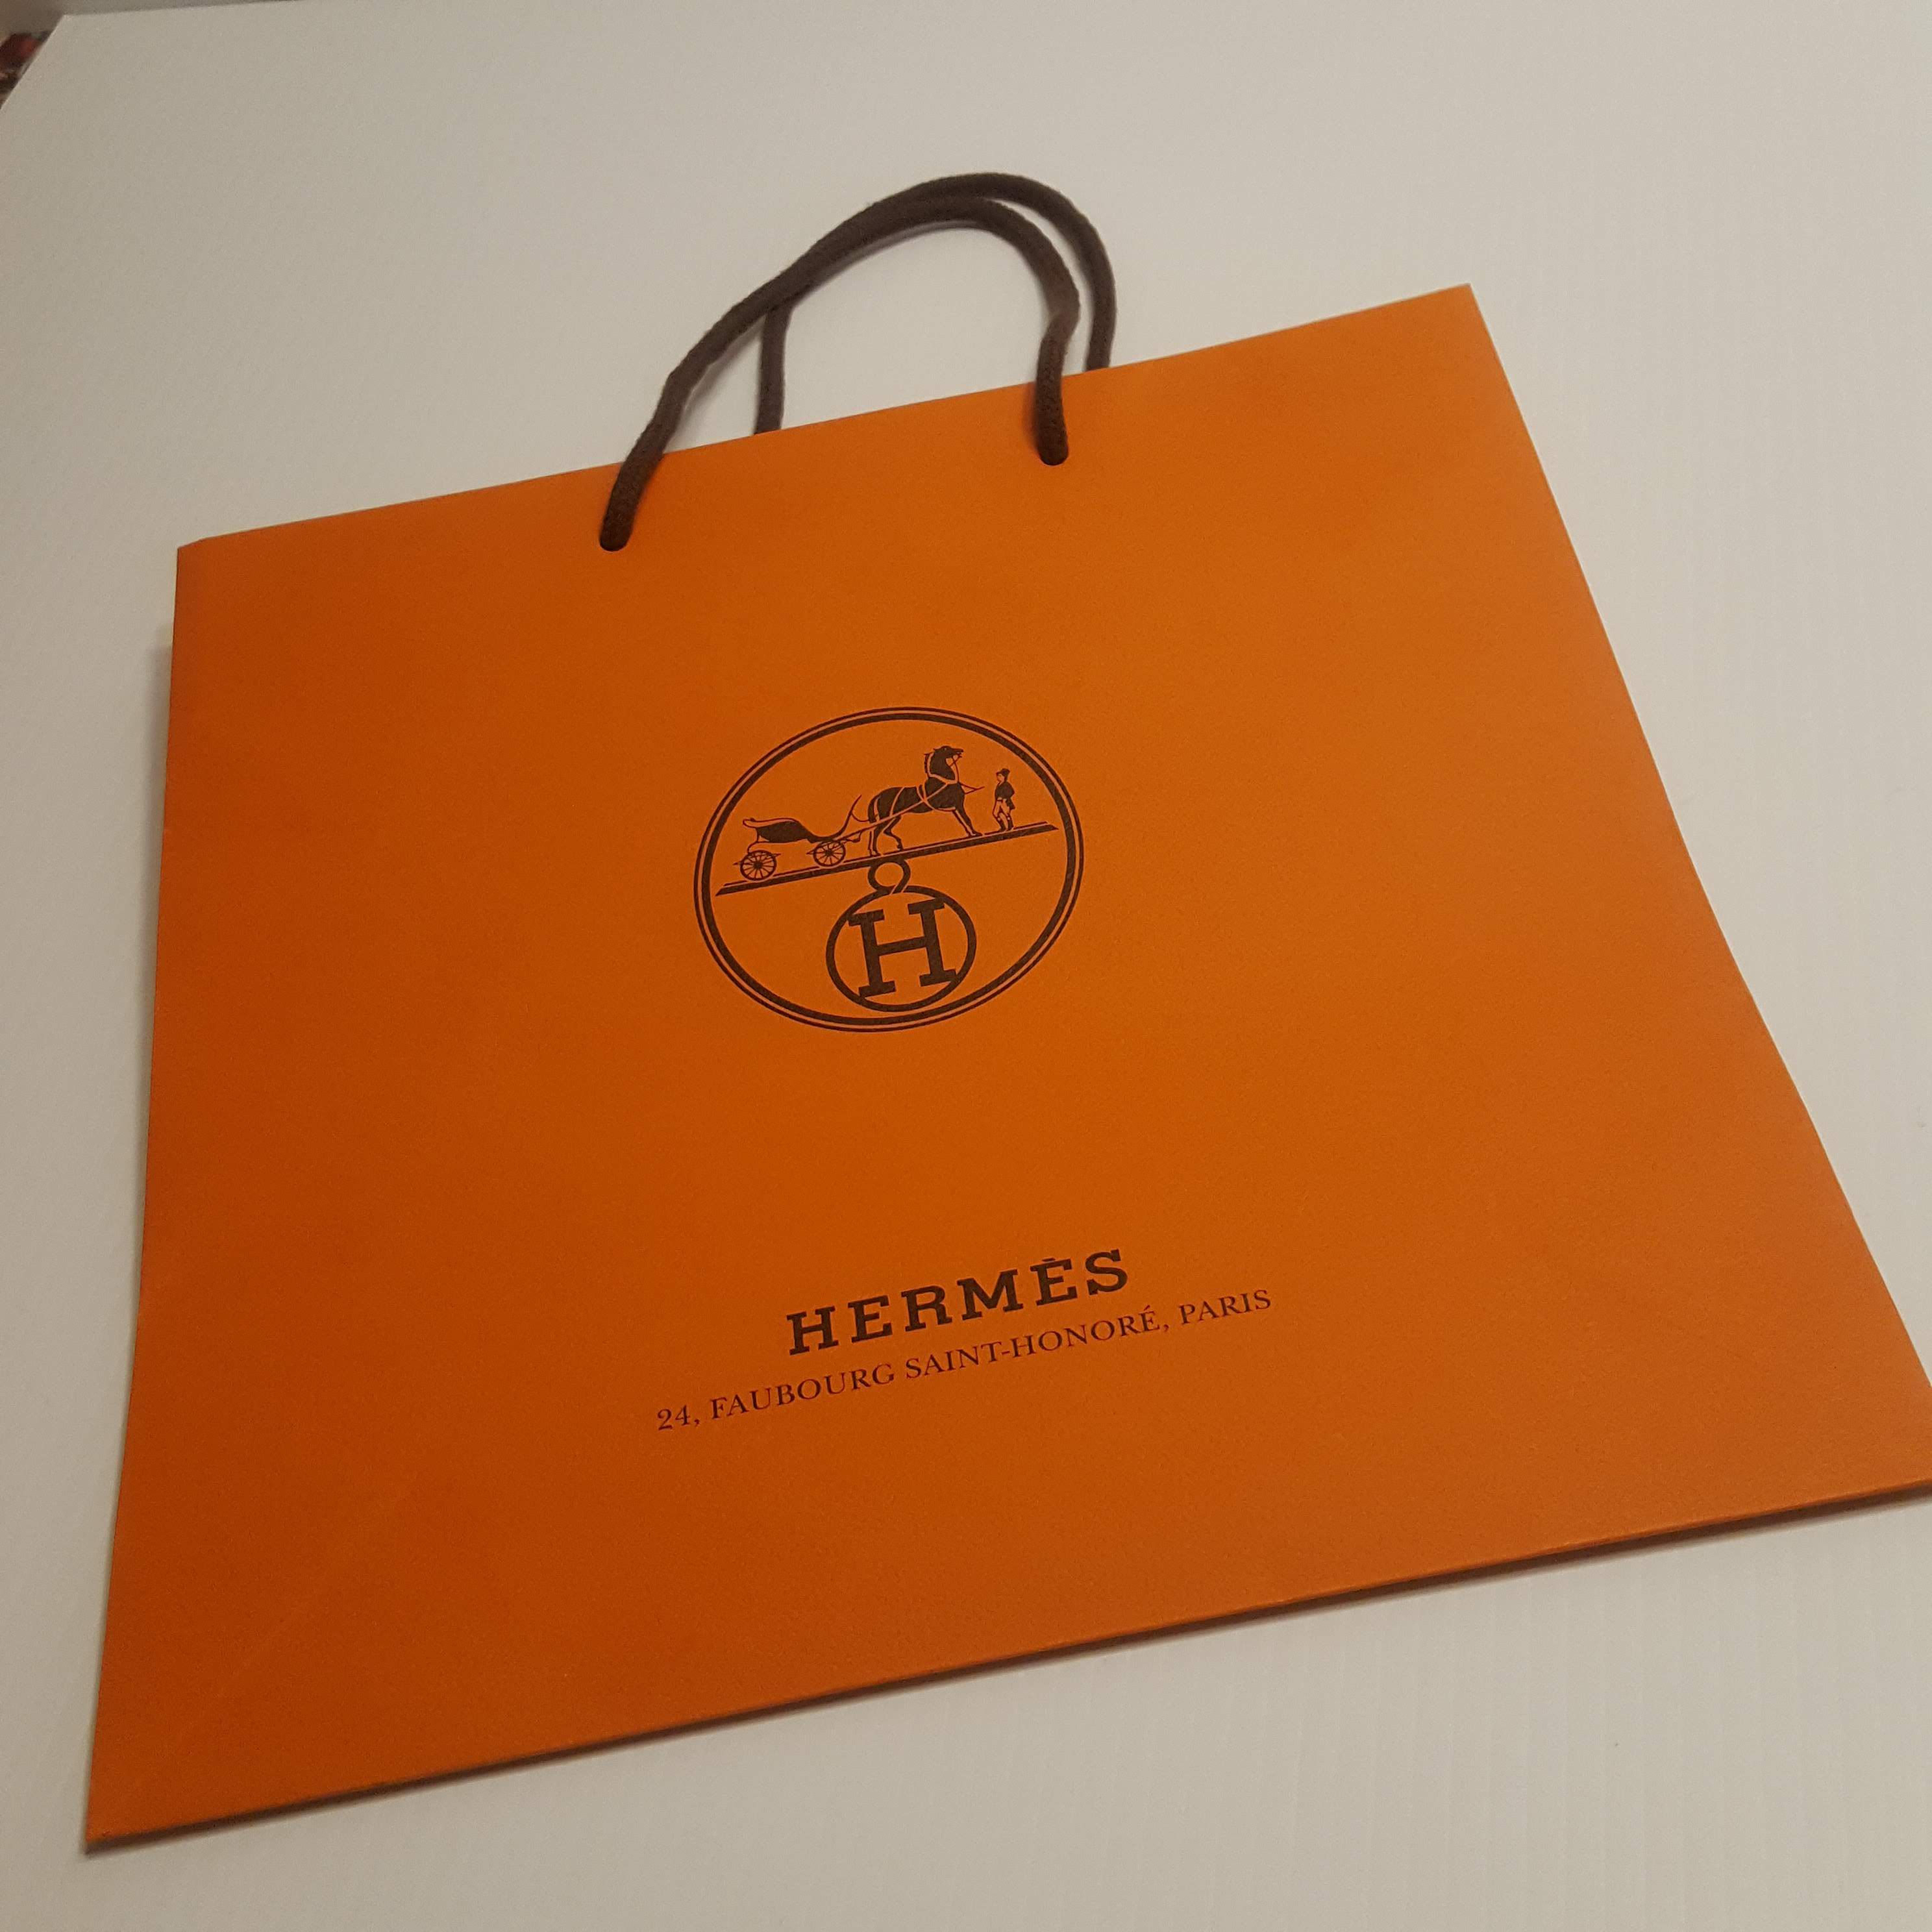 Hermes Orange Shopping Gift Paper Bags Medium size. Perfect shape. Size 11 ¾” x 11 ¾”.